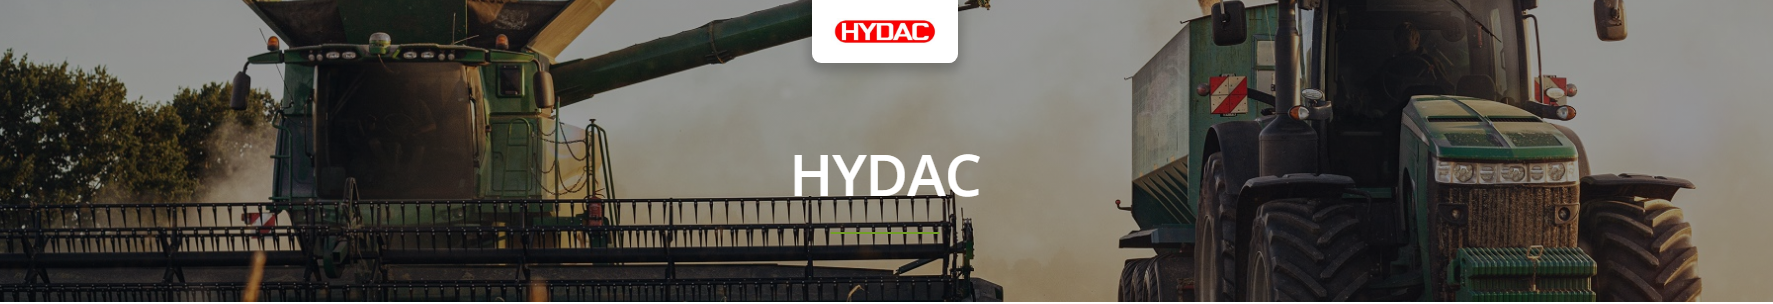 Hydac Hydraulic Accumulators